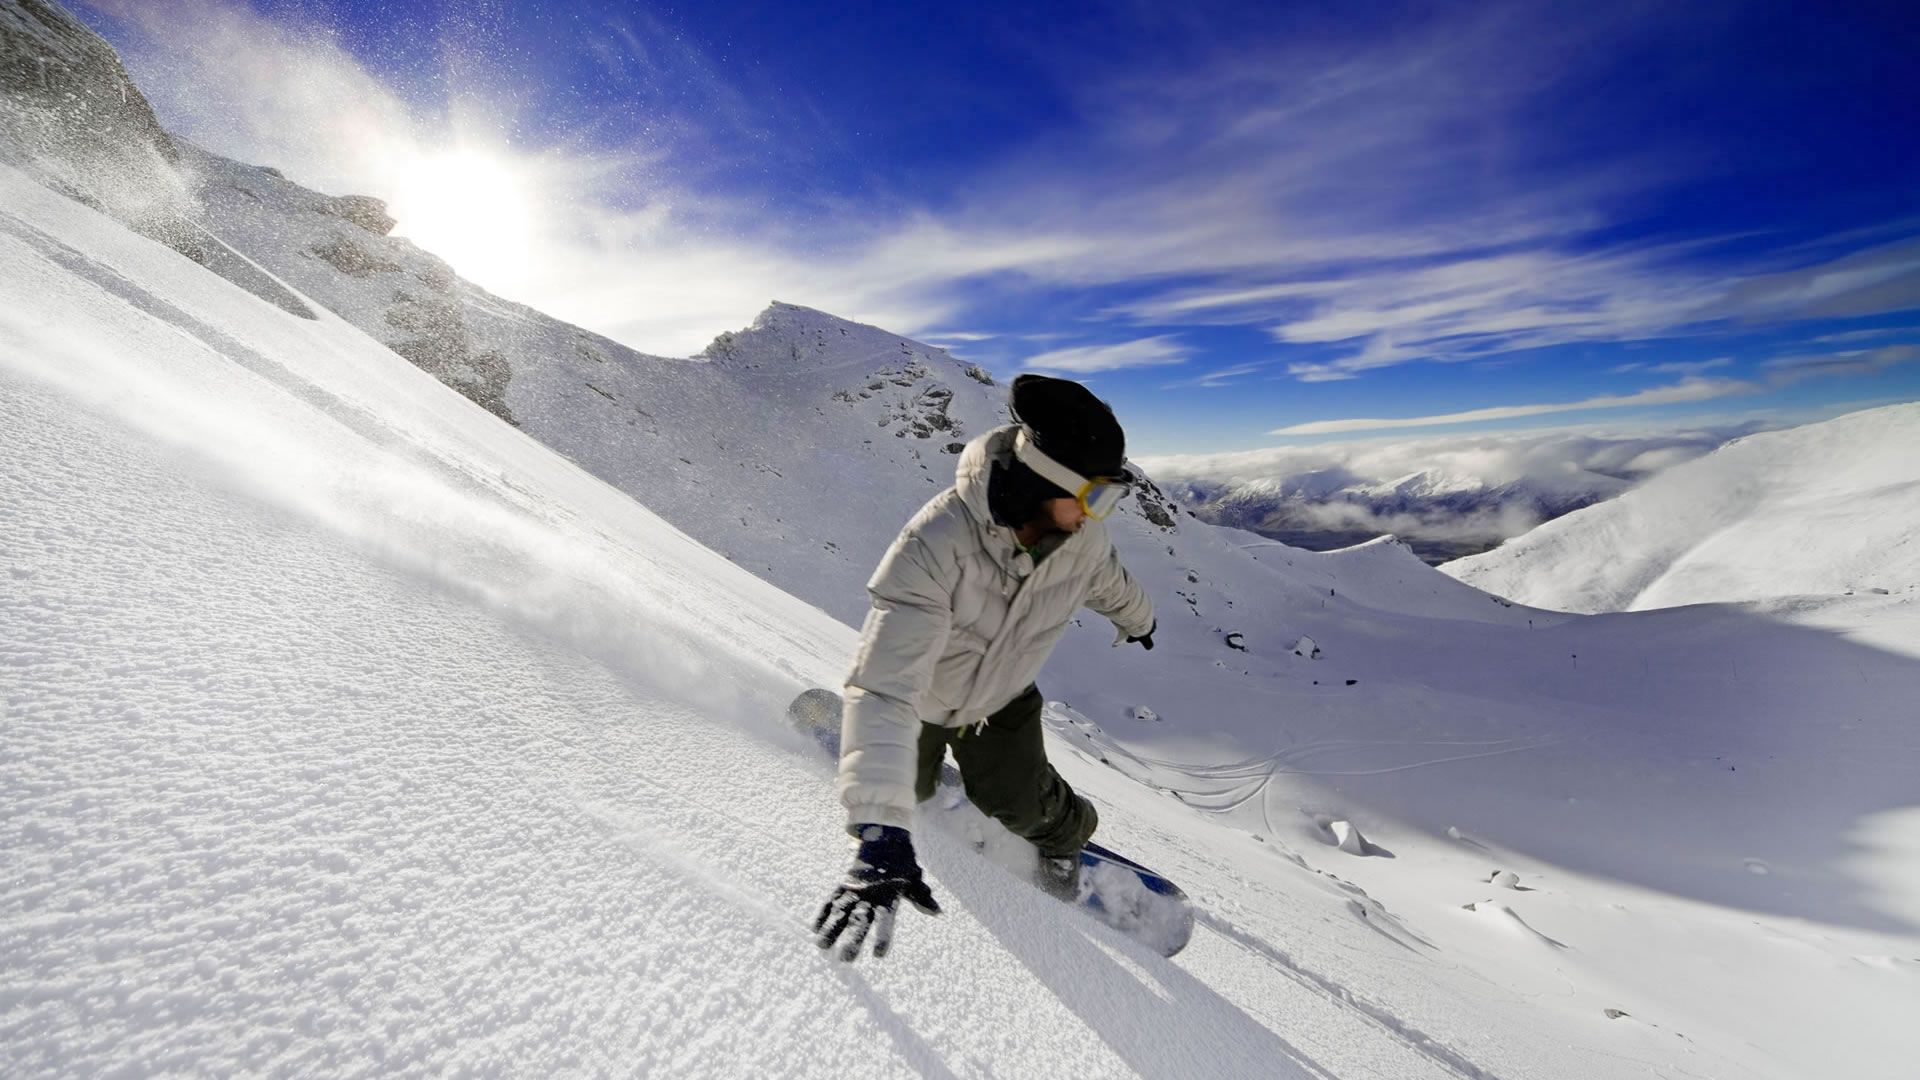 51664 скачать обои спорт, небо, горы, снег, сноуборд, сноубордист - заставки и картинки бесплатно